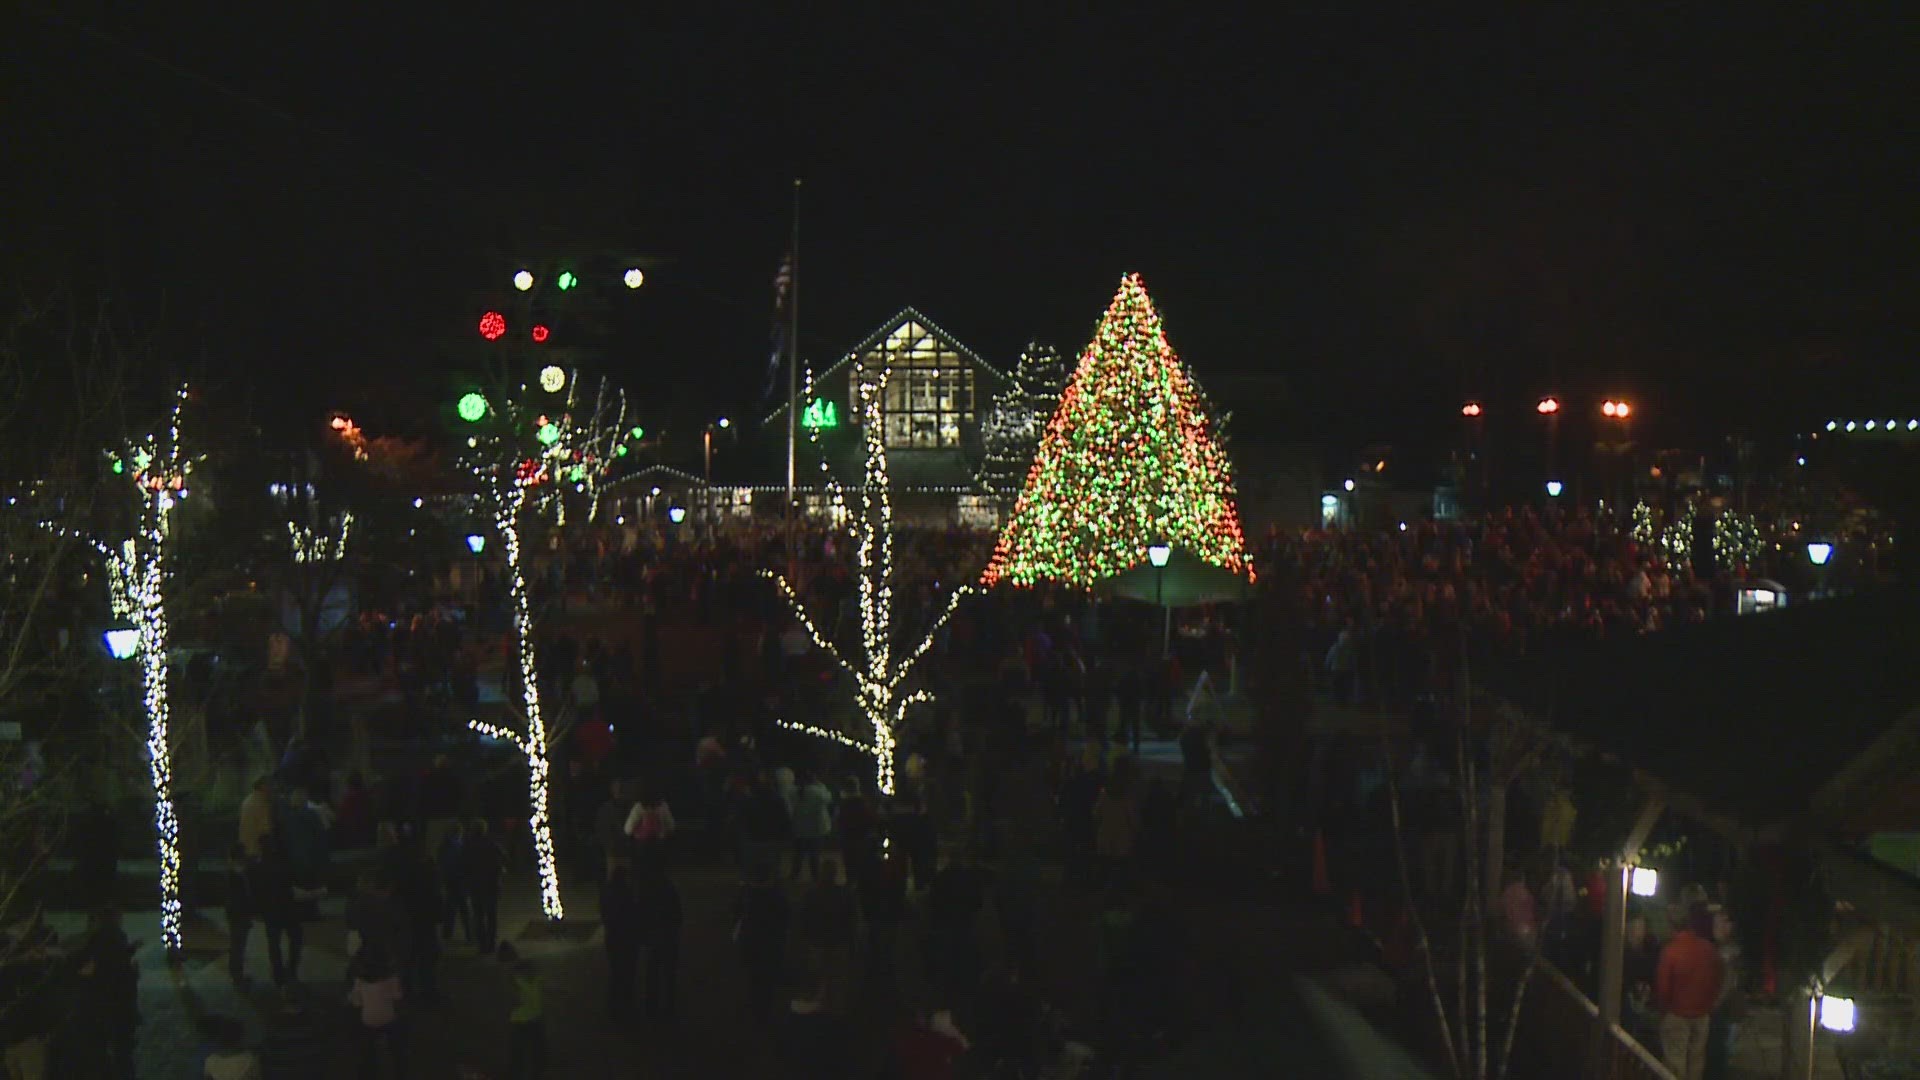 LL Bean tree lighting ceremony dedicated to Lewiston community